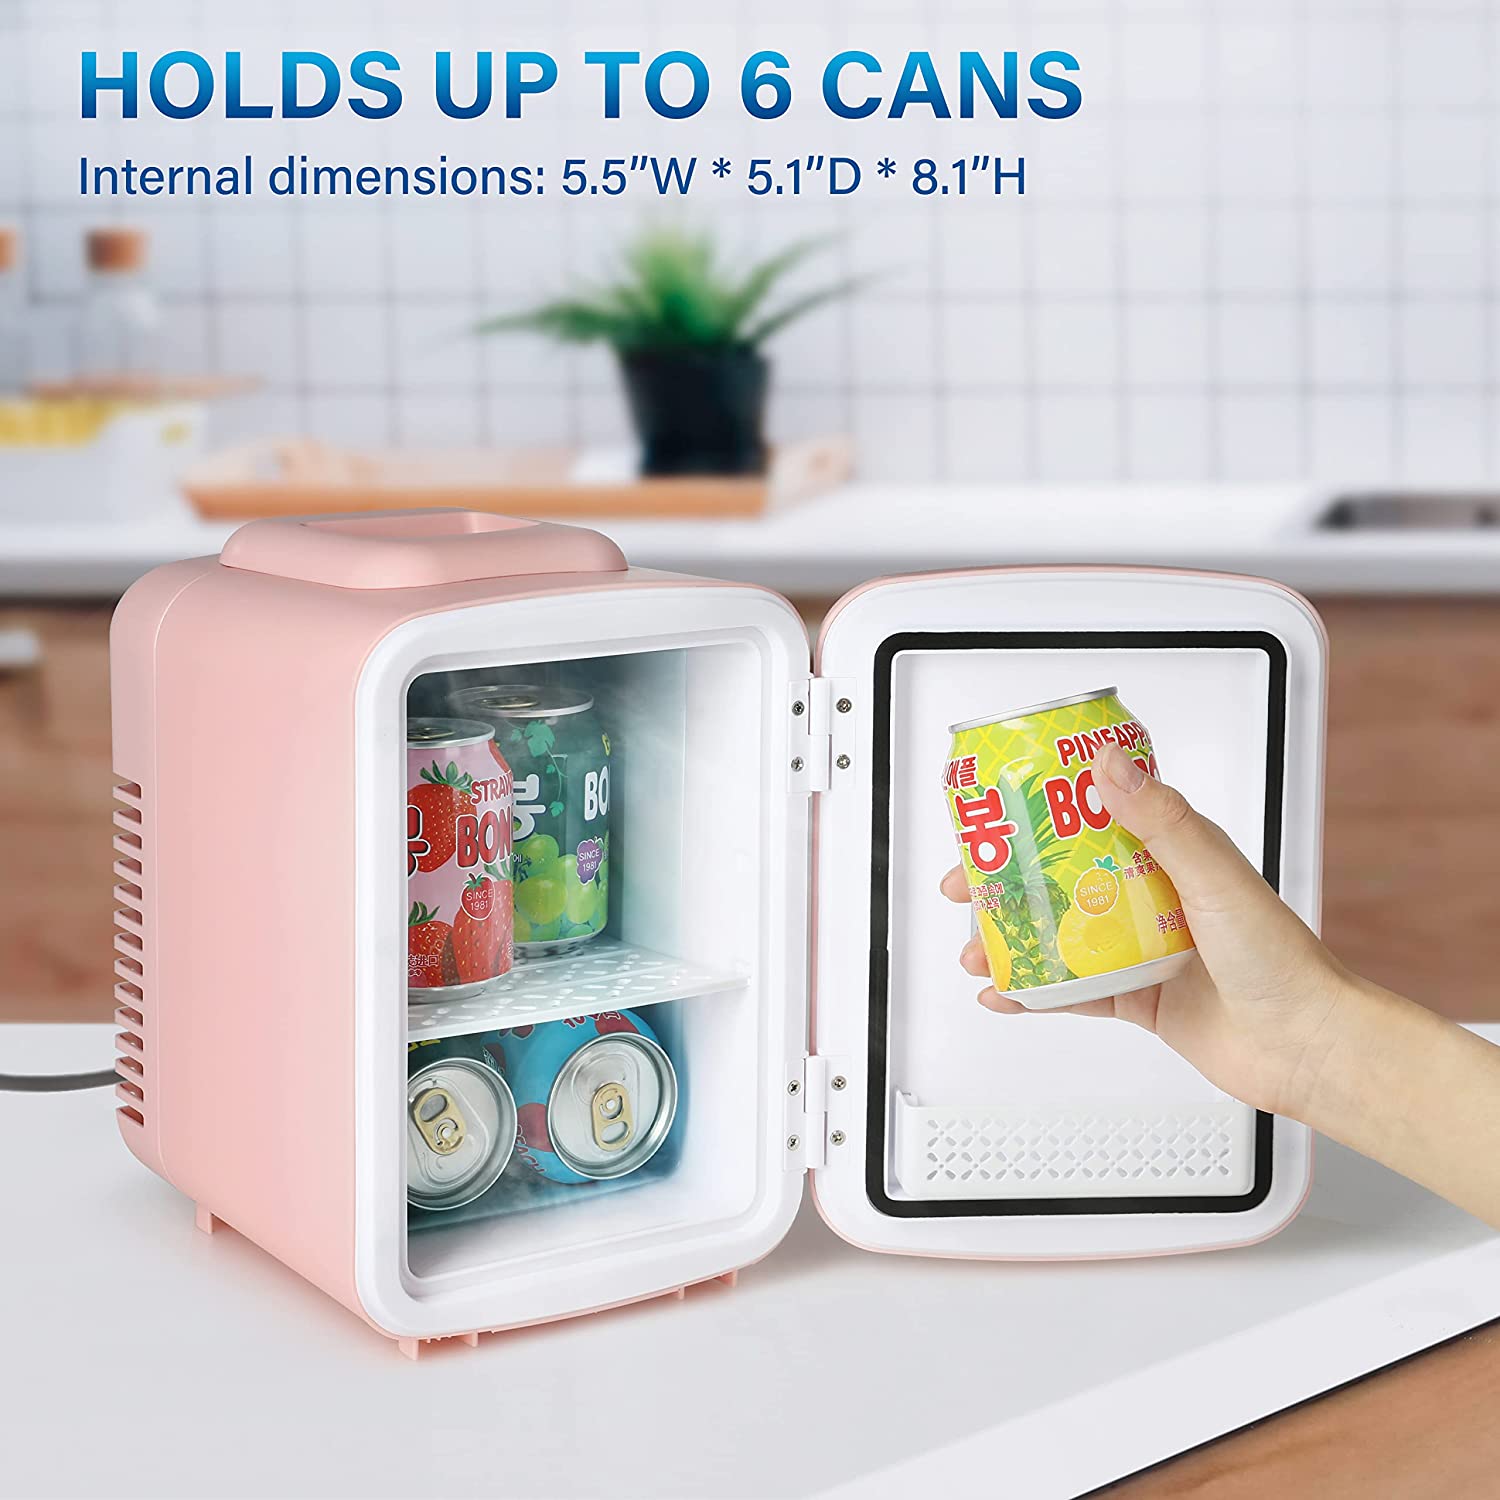 Mini Fridge Freezer Retro Pink Peach Sun Room Basement Compact Refrigerator  NEW